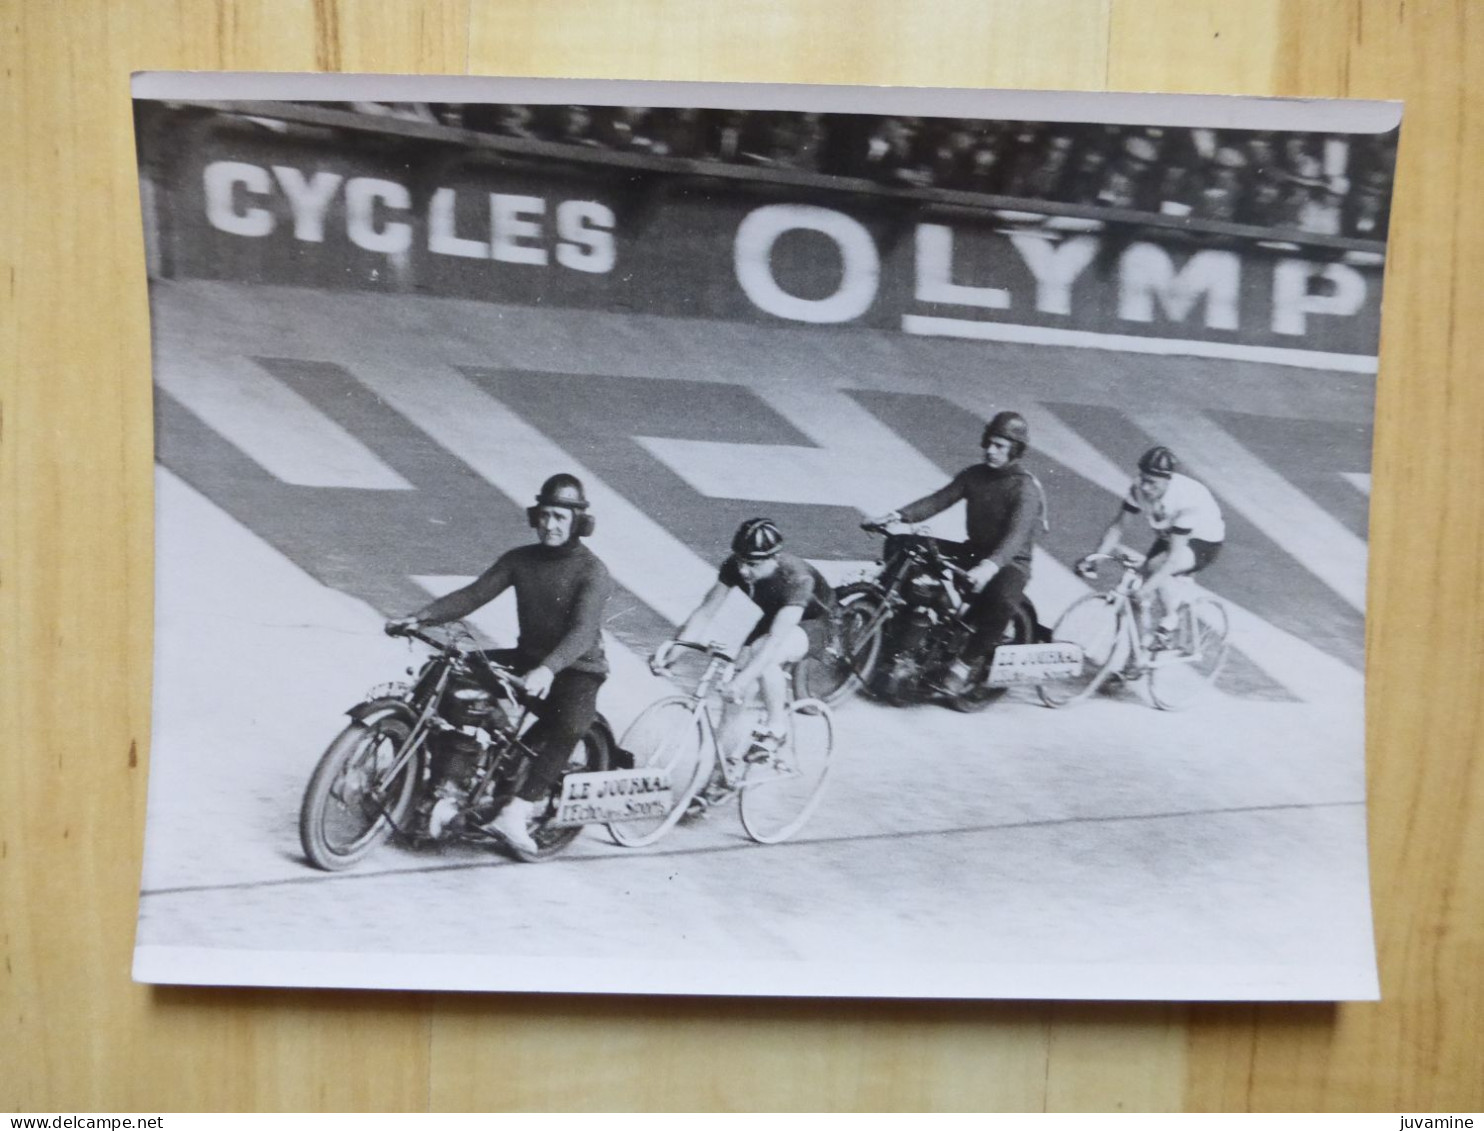 STADE BUFFALO 1934  - SELECTION CRITERIUM DES AS - L'ALLEMAND EHMER DOUBLE FAUDET - PHOTOGRAPHIE CYCLISME CYCLISTE SPORT - Ciclismo